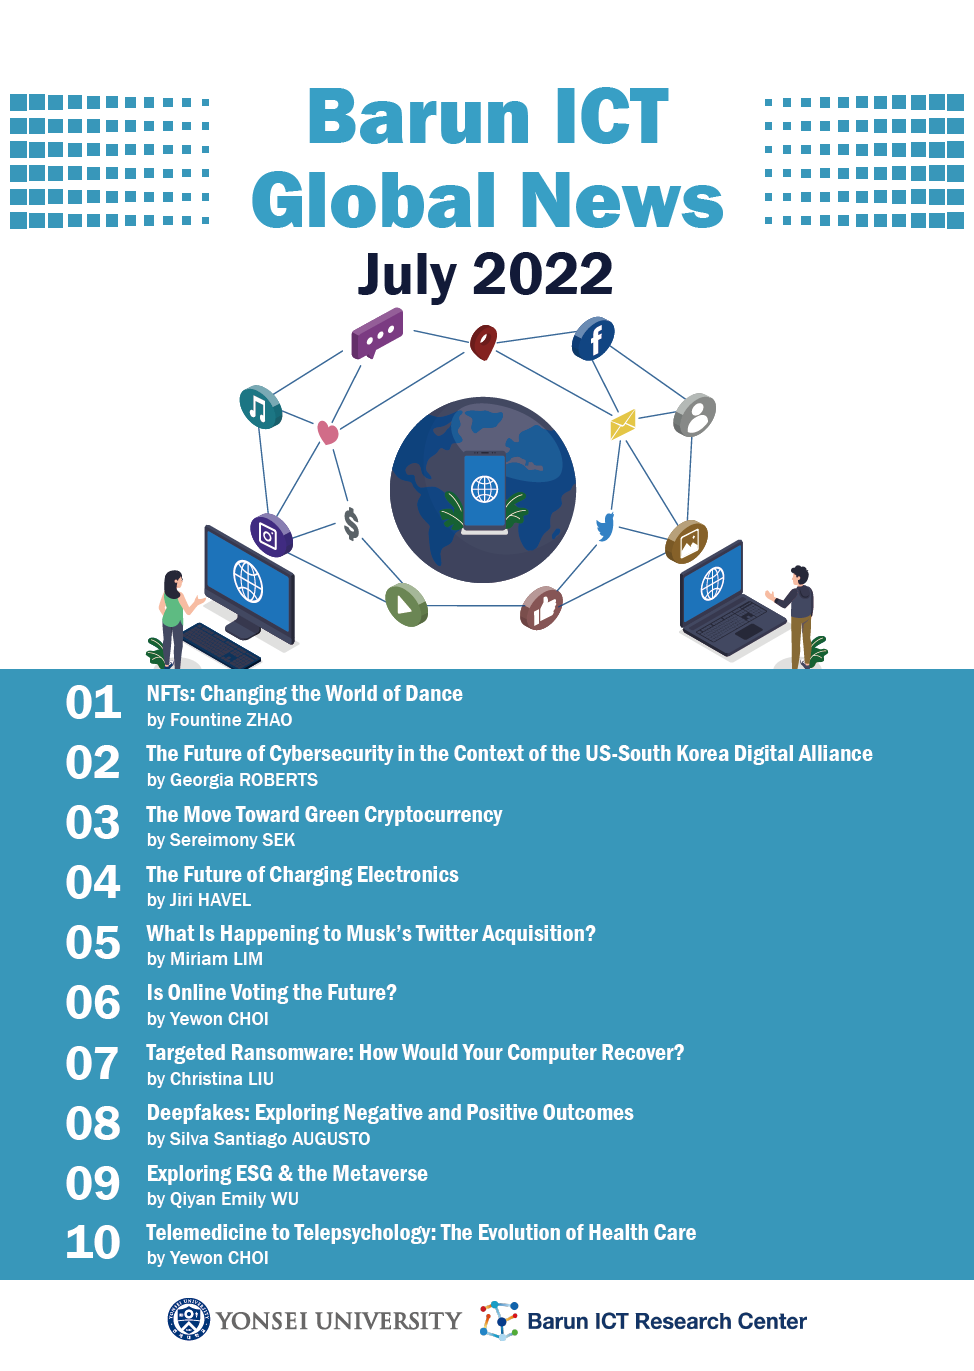 Barun ICT Global News July 2022